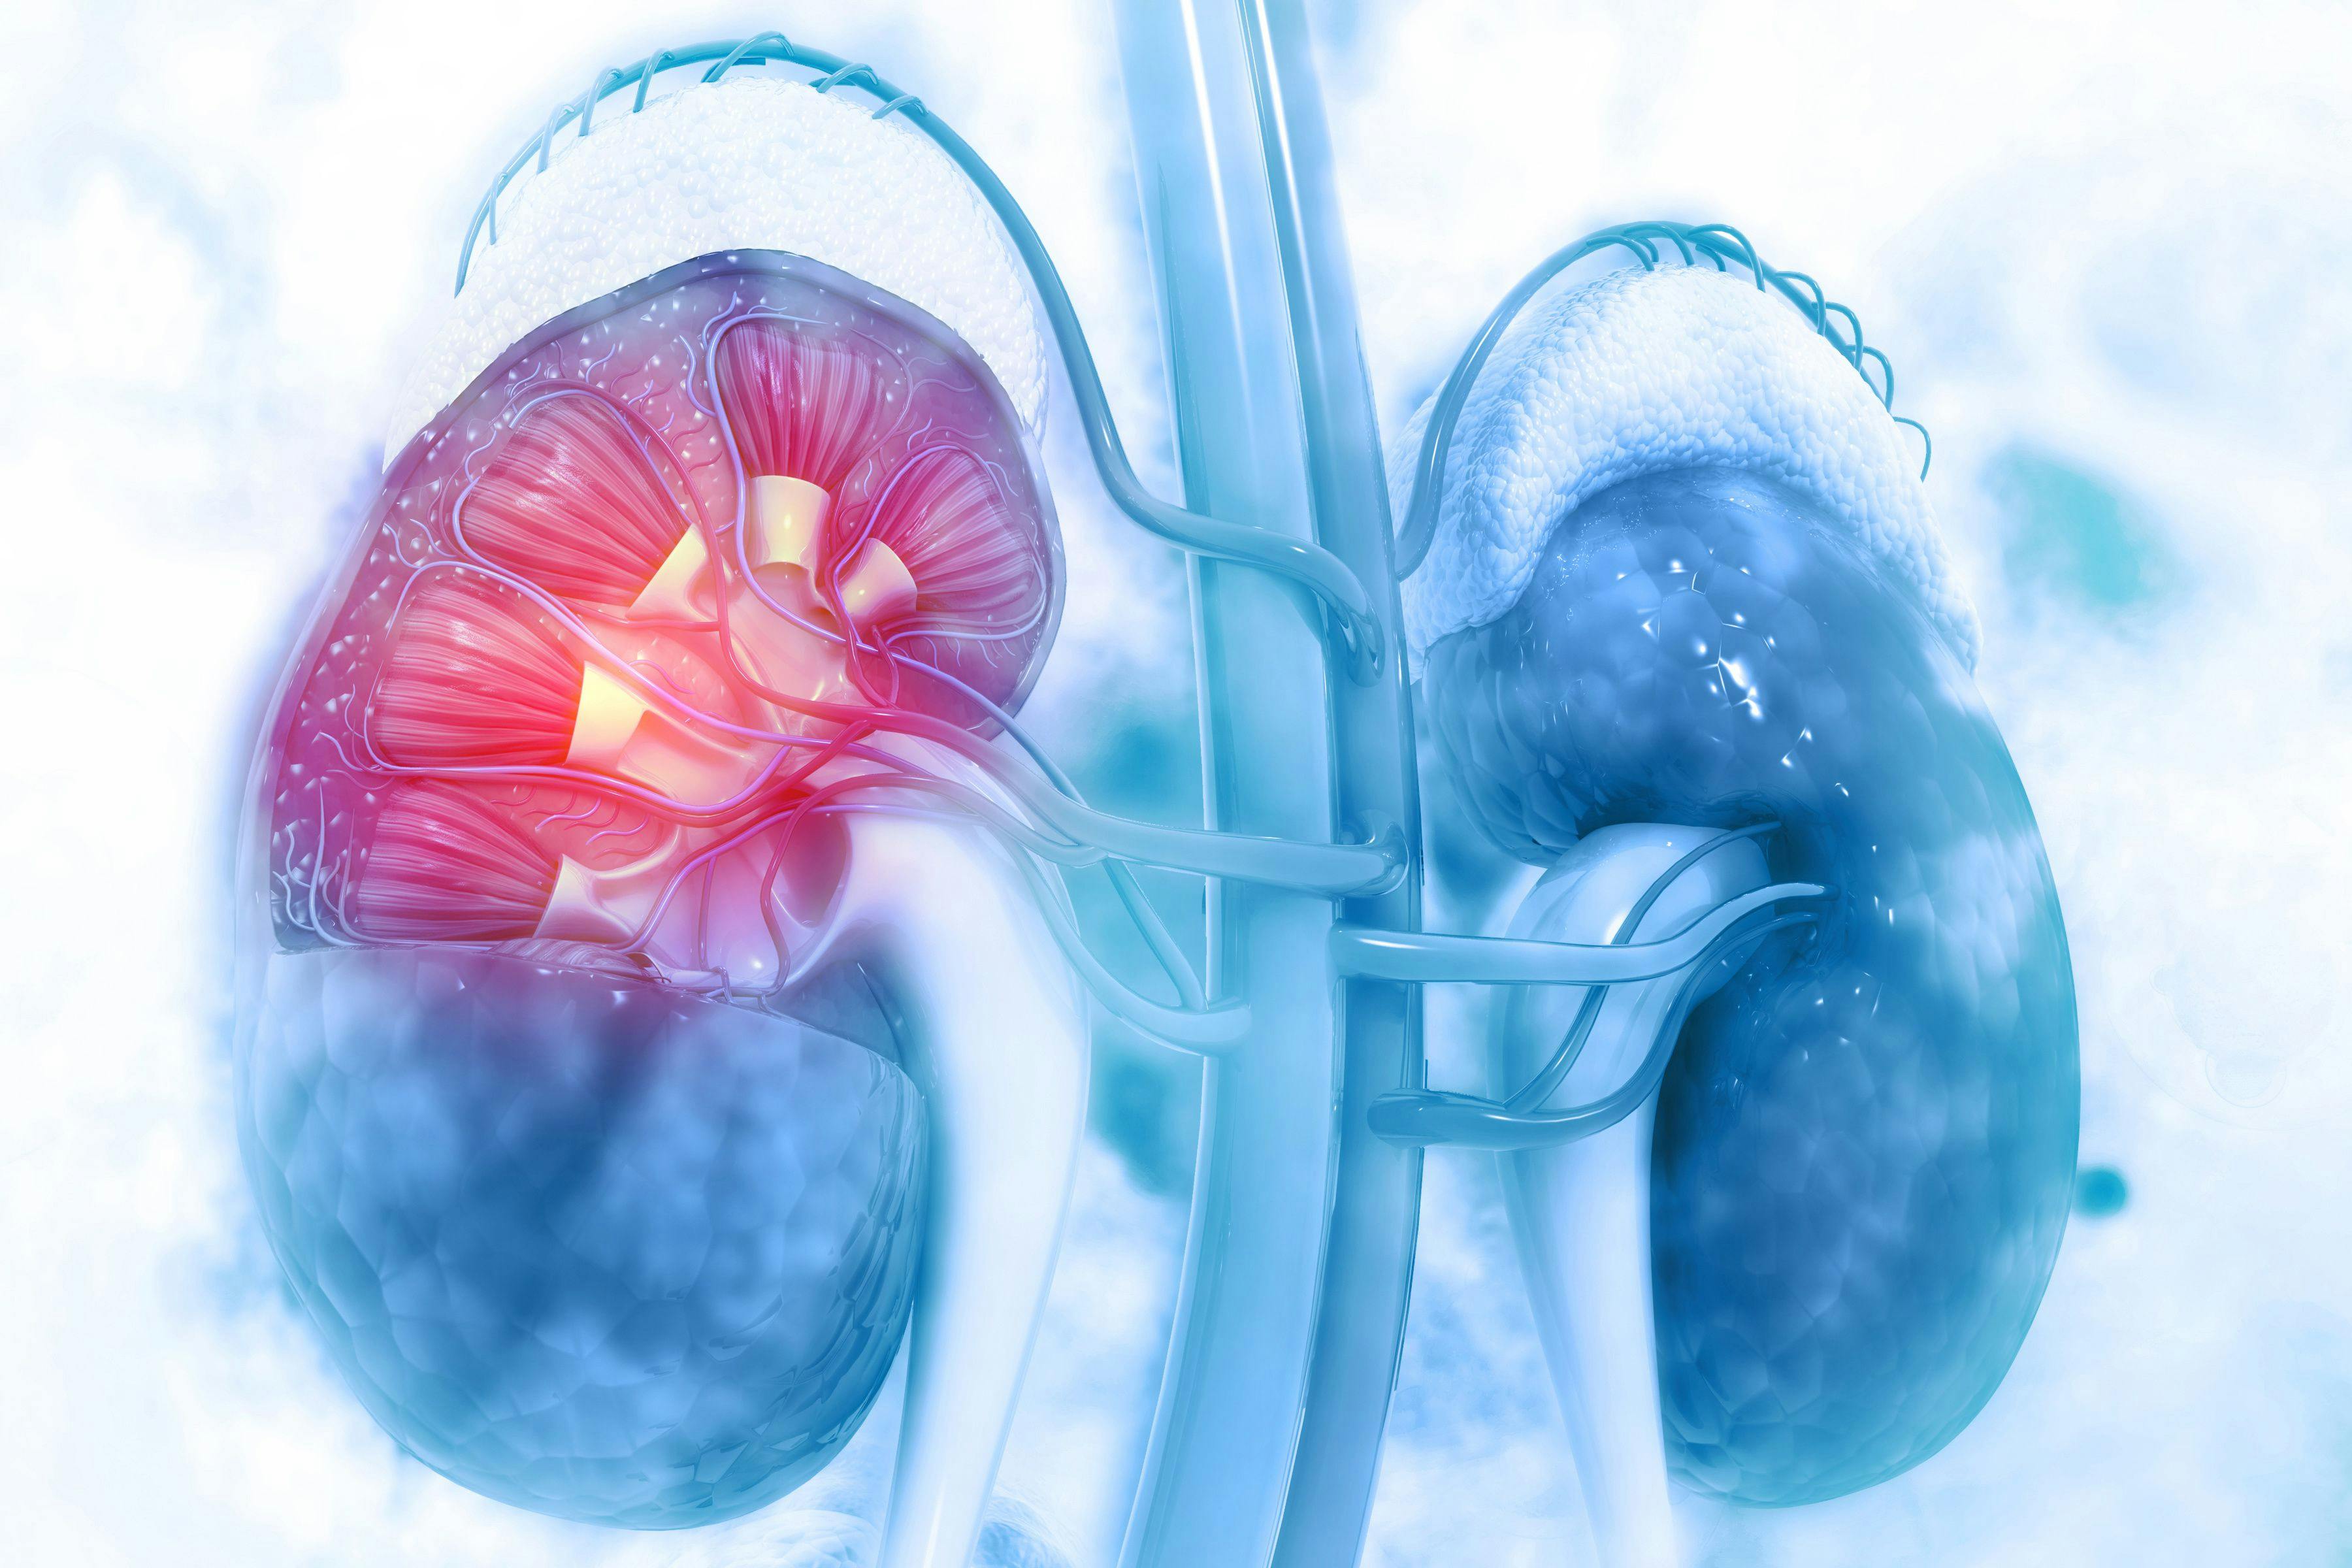 Digital illustration of anatomically correct kidneys | Credit: Adobe Stock